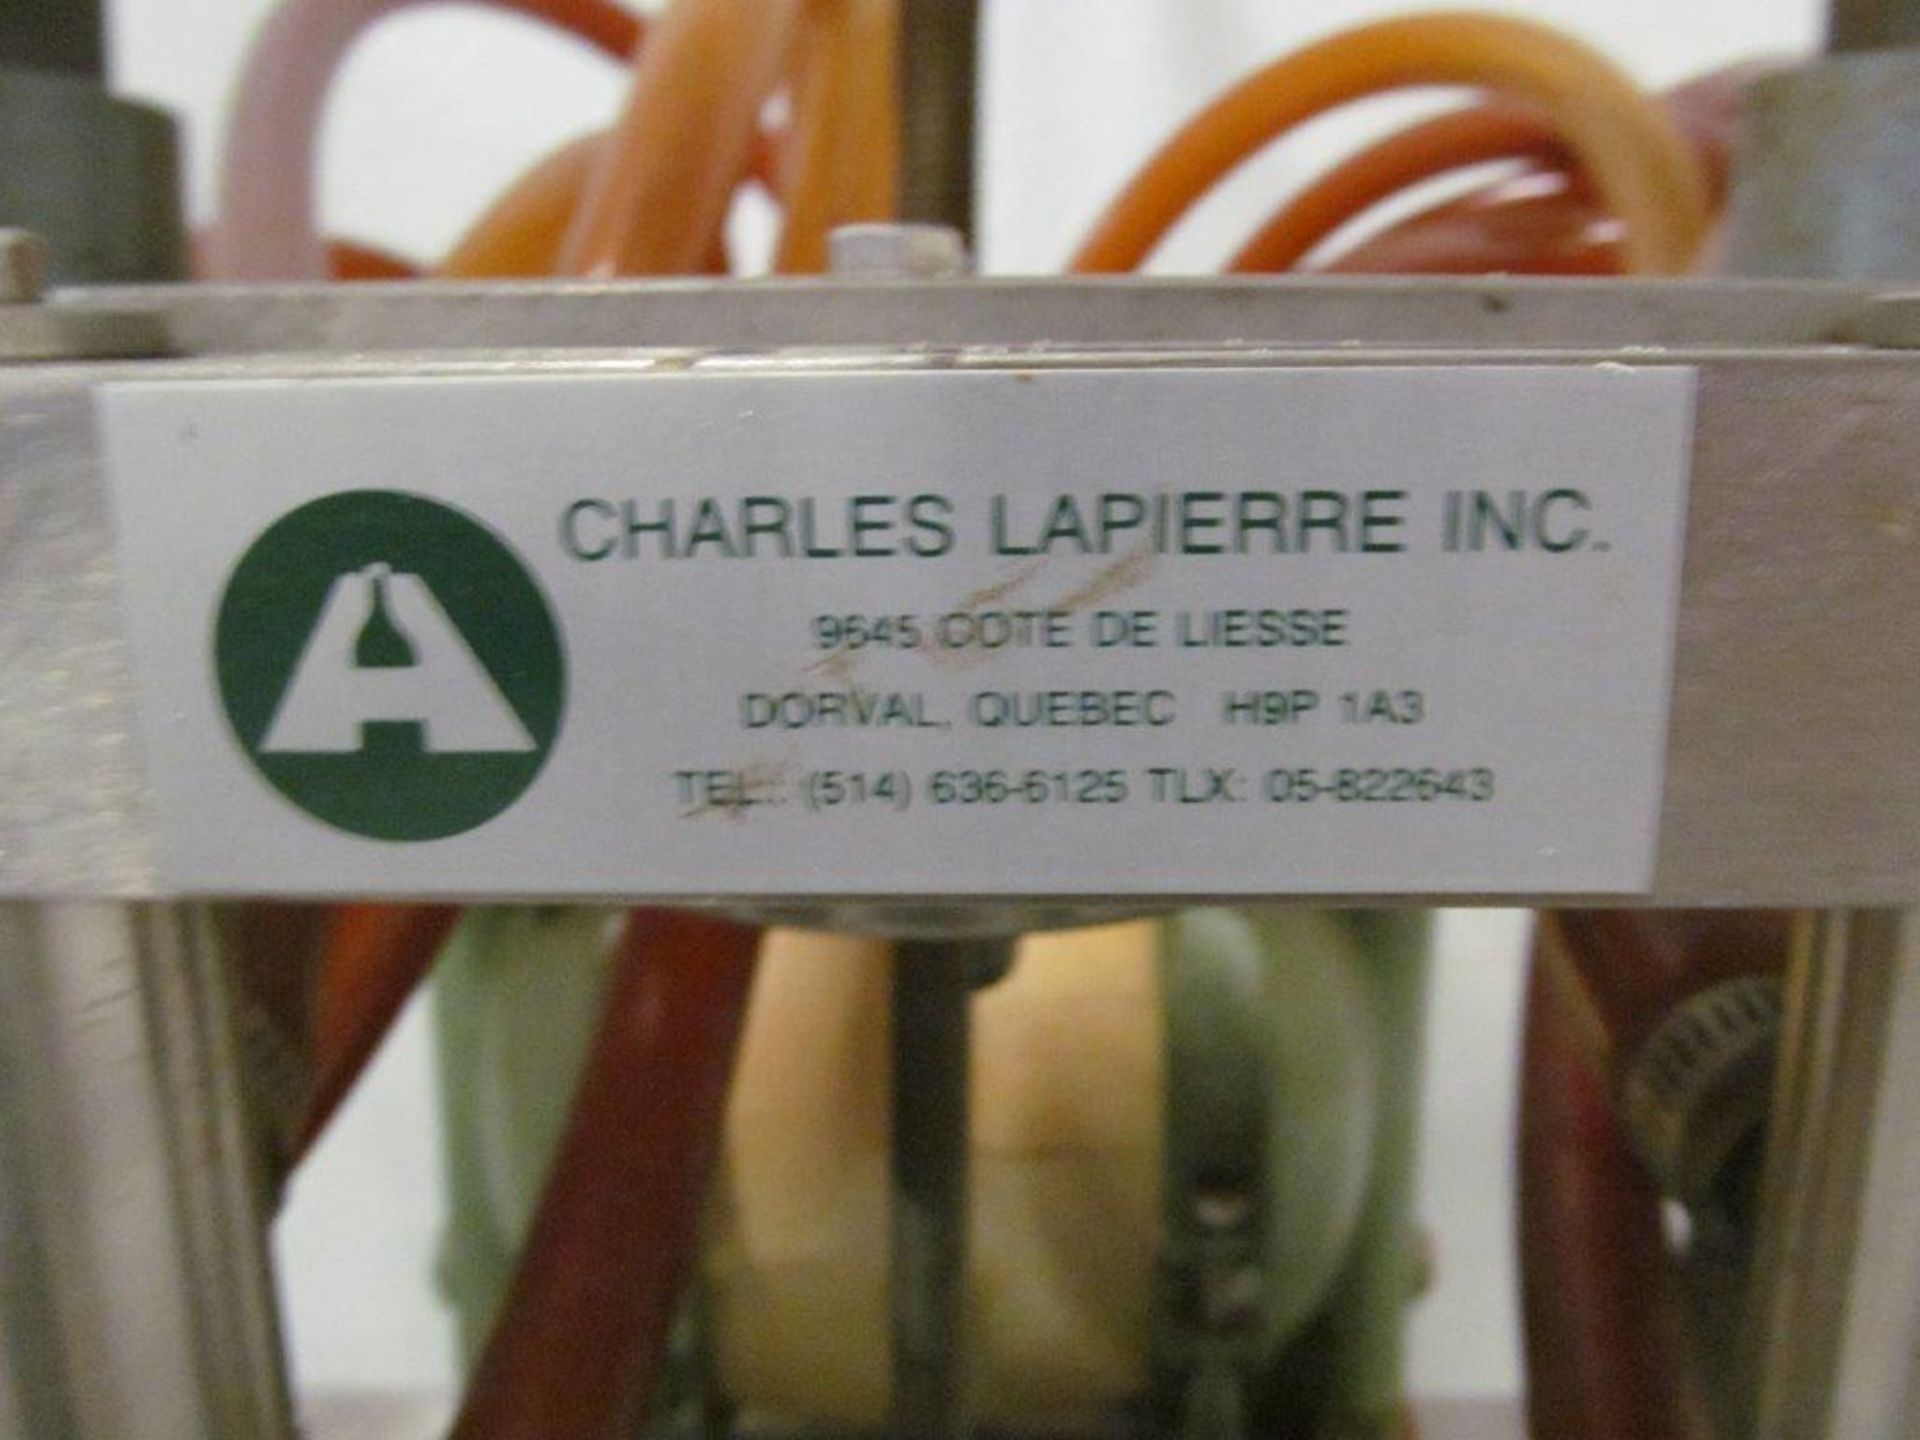 CHARLES LAPIERRE INC. (CANADA), 8 PISTON HEAD S/S FILLER, C/W CONVEYOR 4'' X 8FT LONG - Image 5 of 5